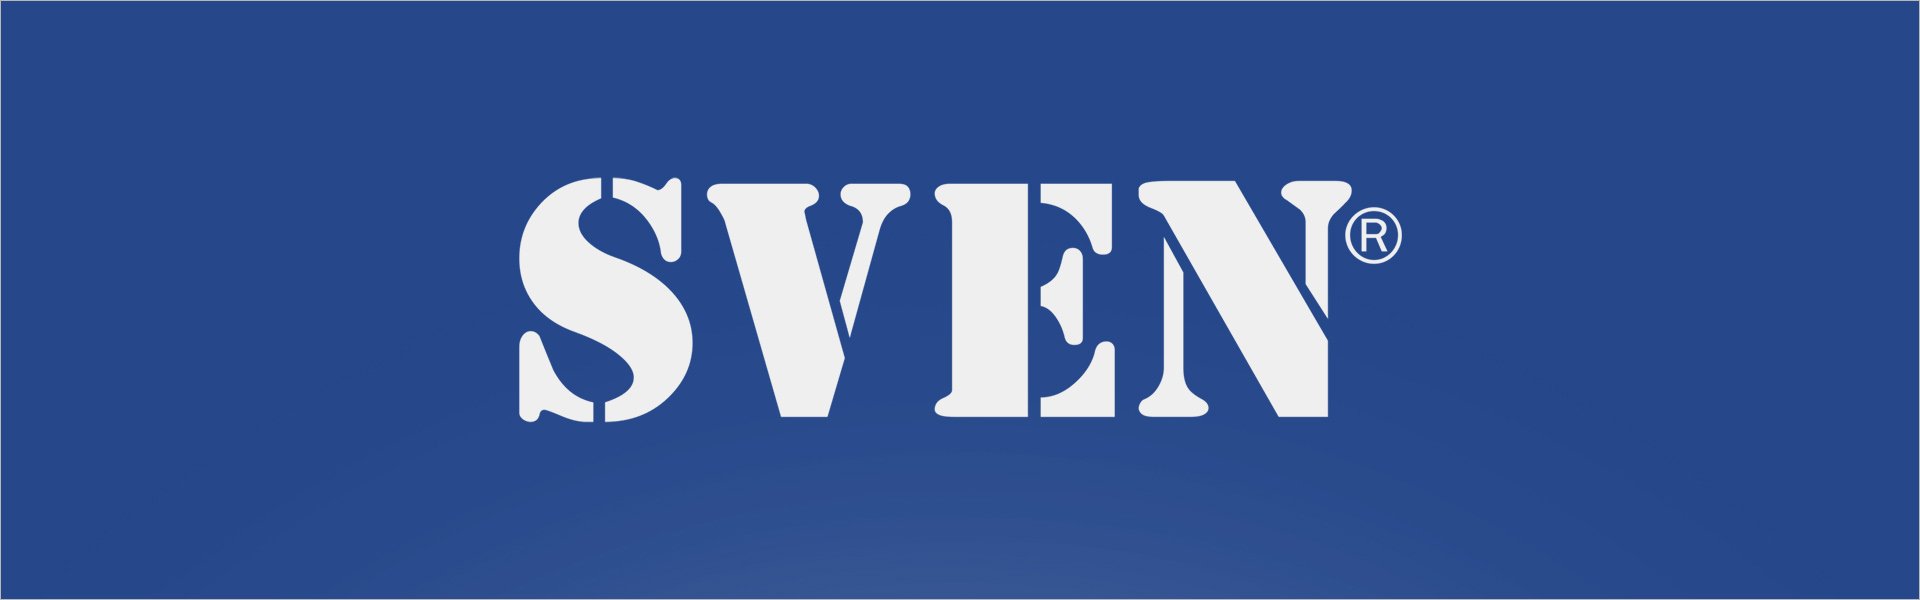 Sven MS-2085 SV-020101, must Sven